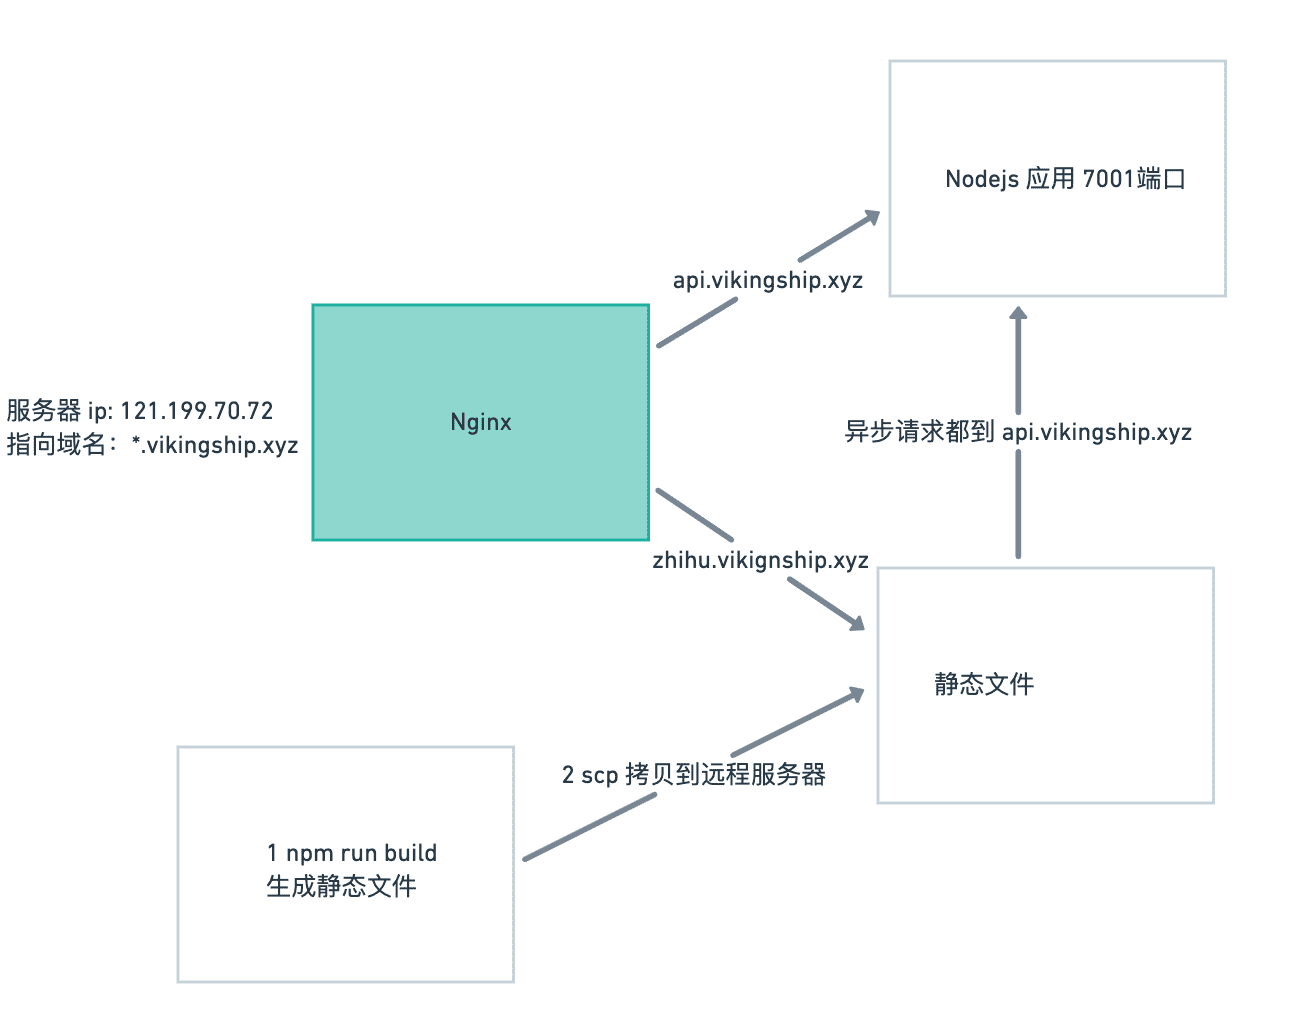 Nginx 服务器的功能